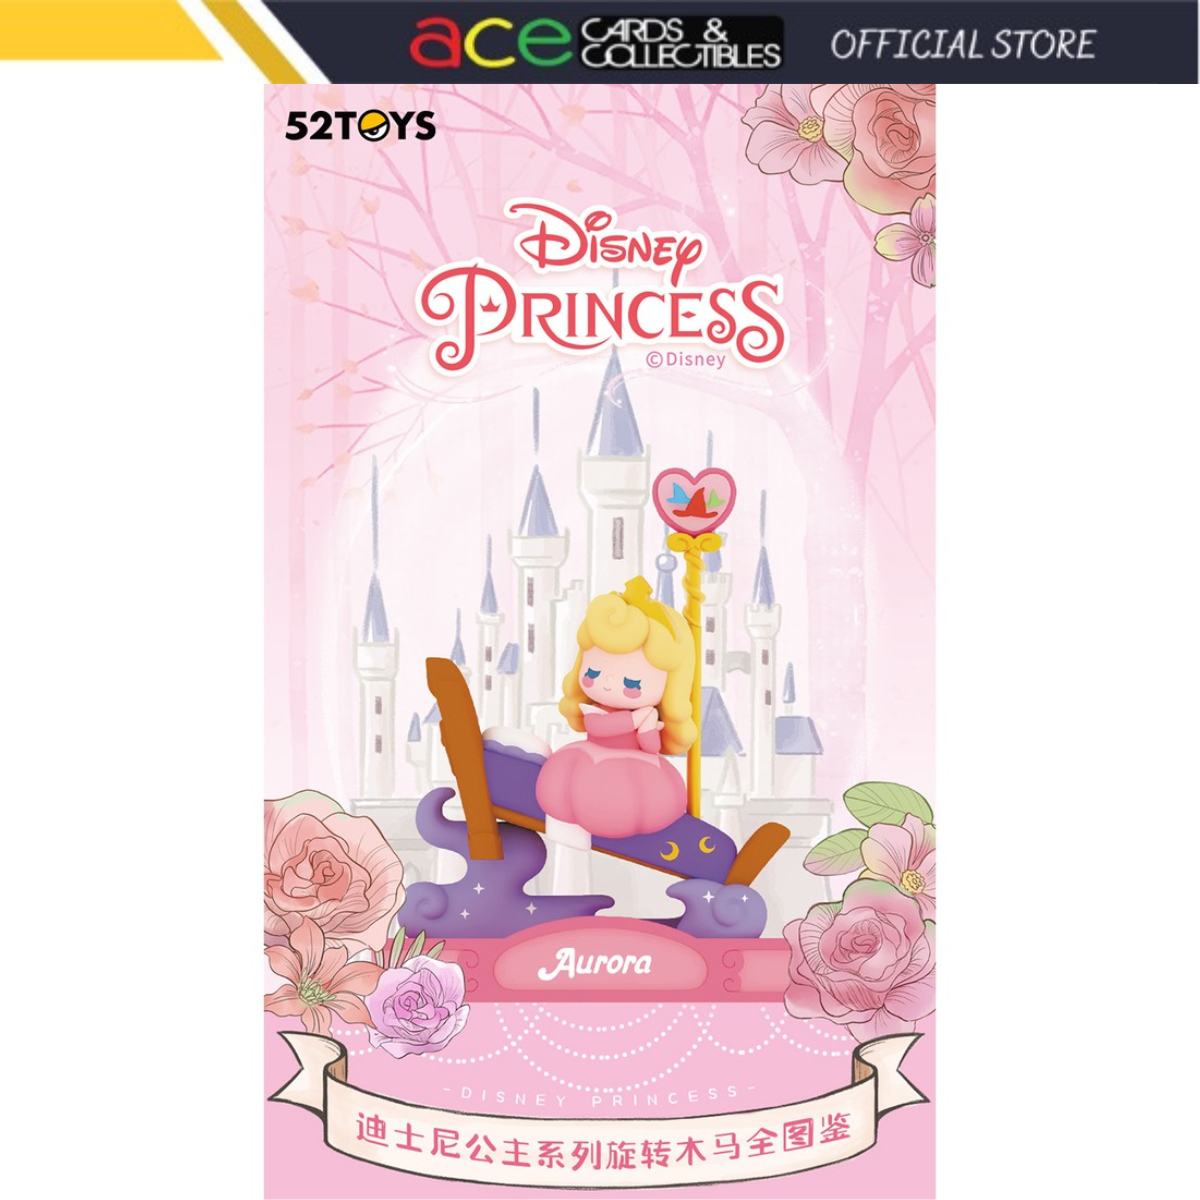 52Toys x Disney Princess Carousel Series-Single Box (Random)-52Toys-Ace Cards & Collectibles